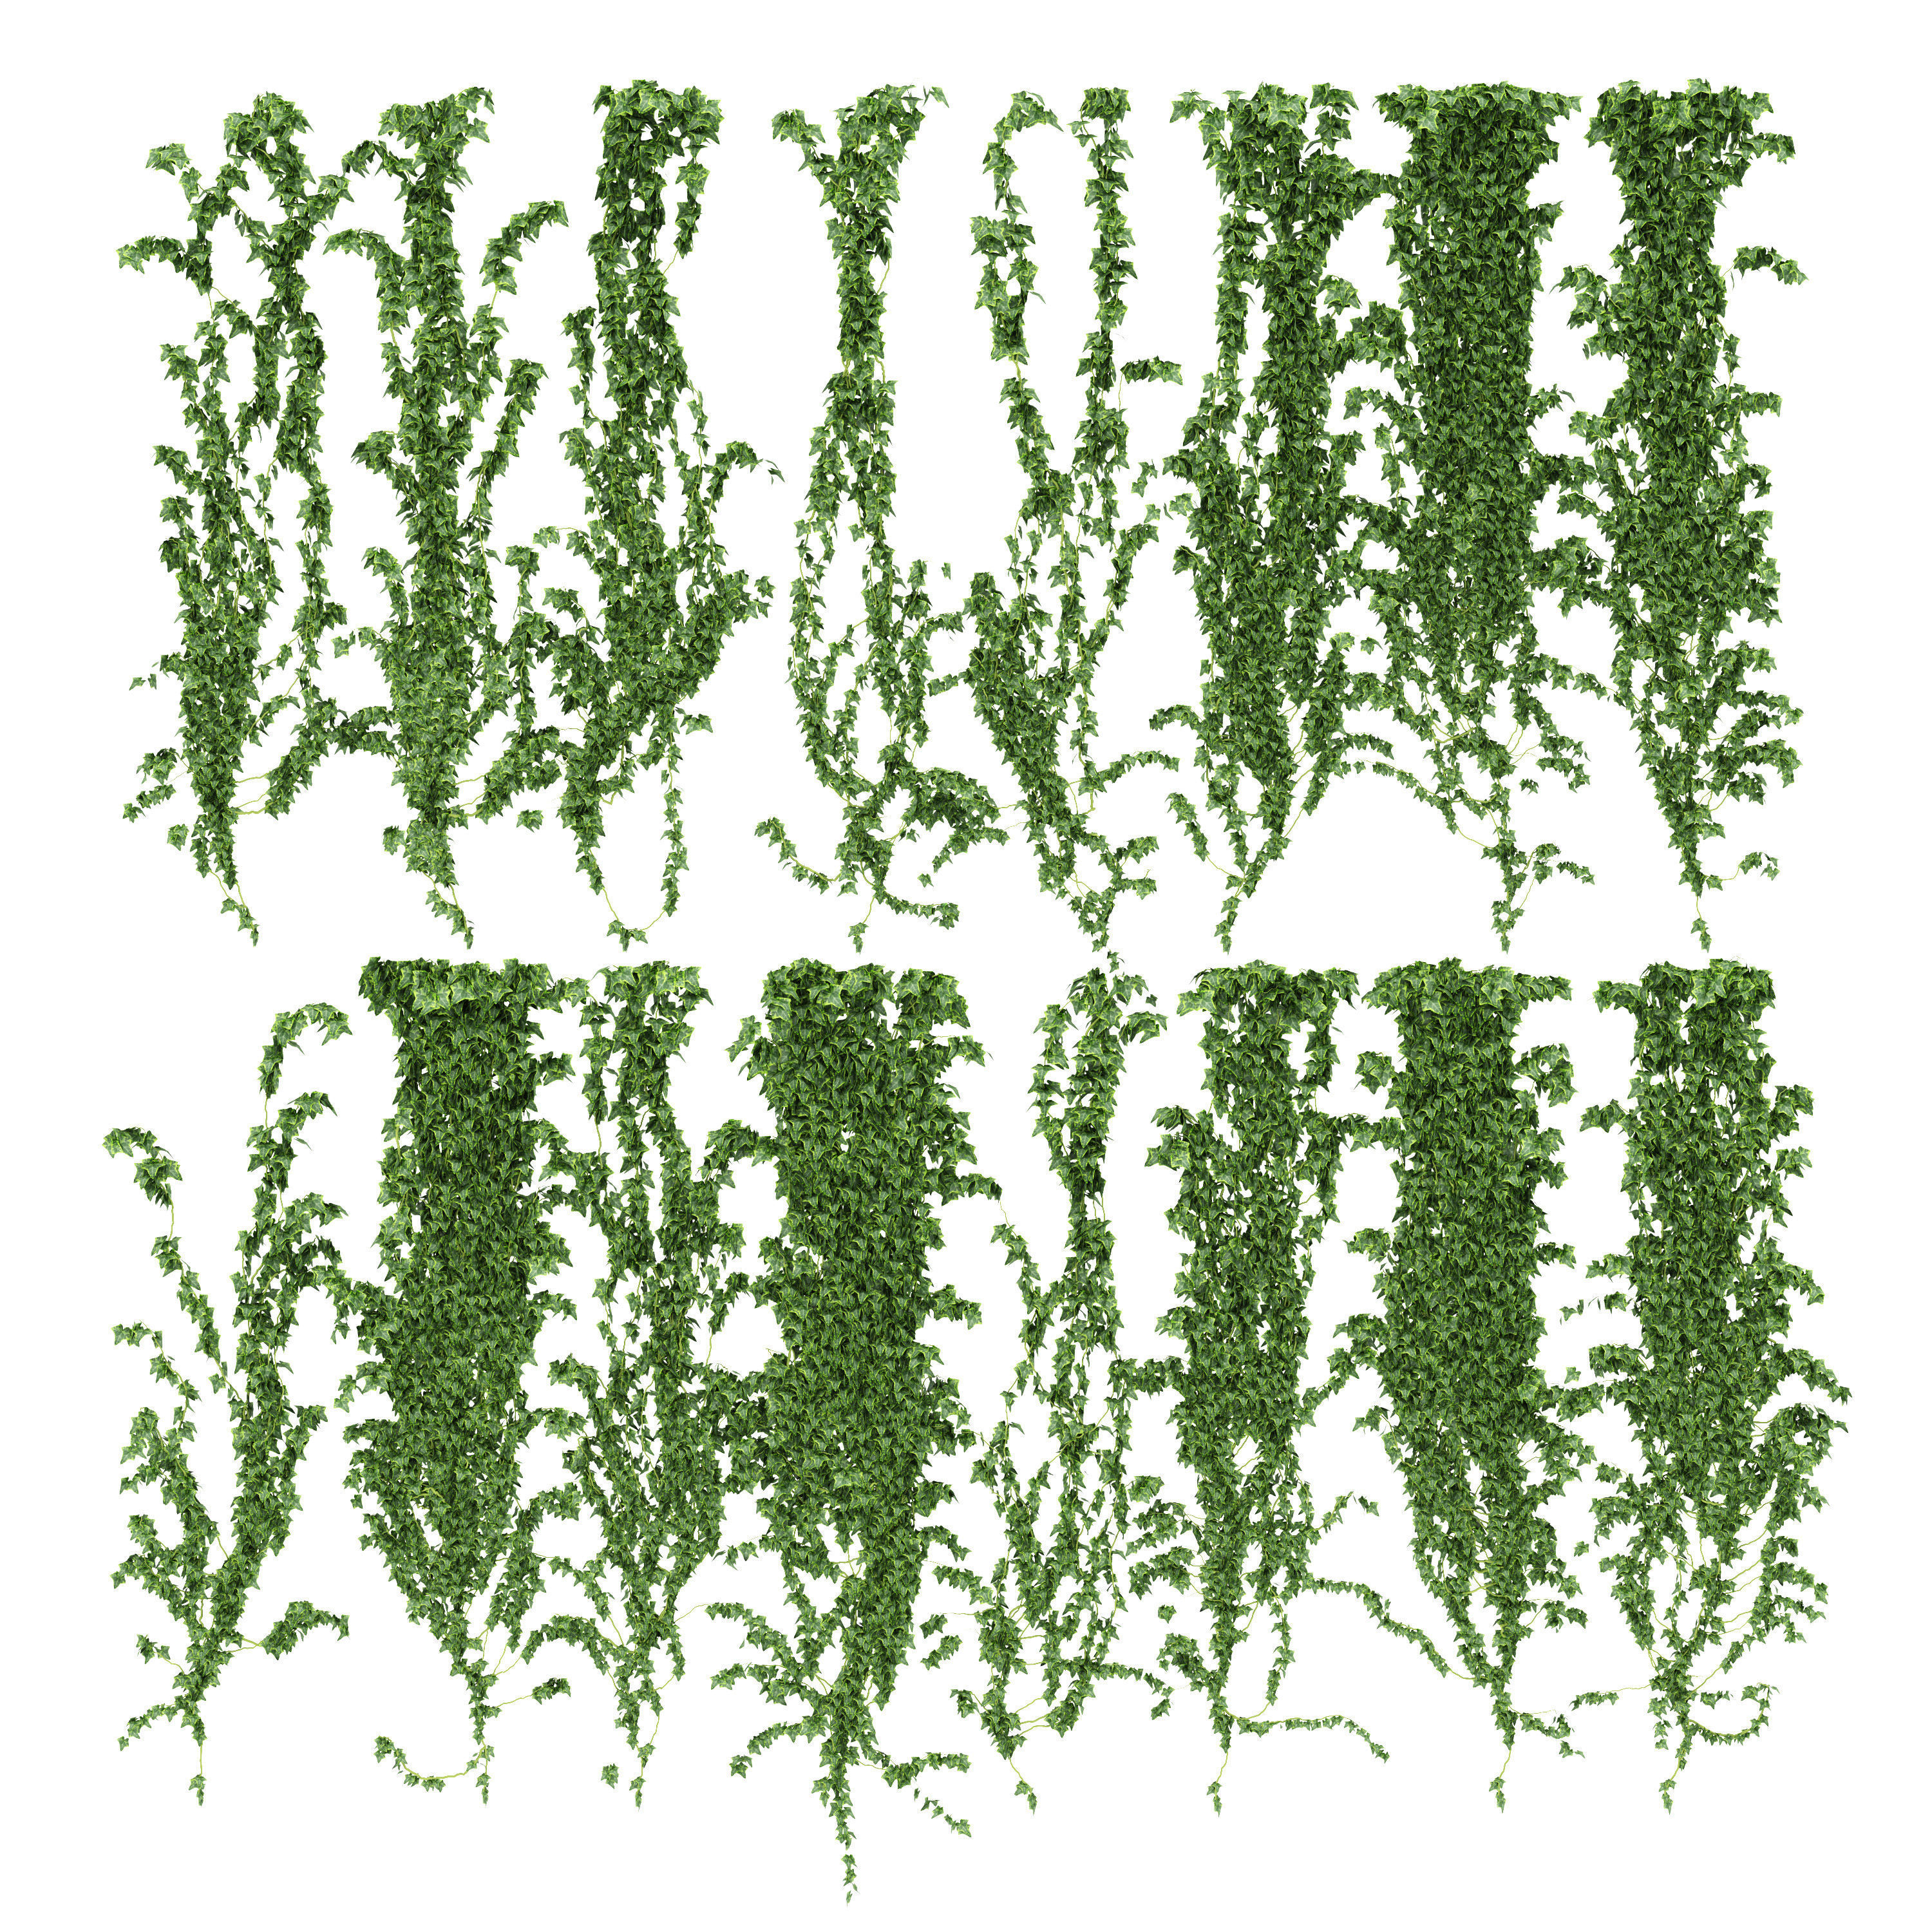 3D Ivy wall 16 species | CGTrader